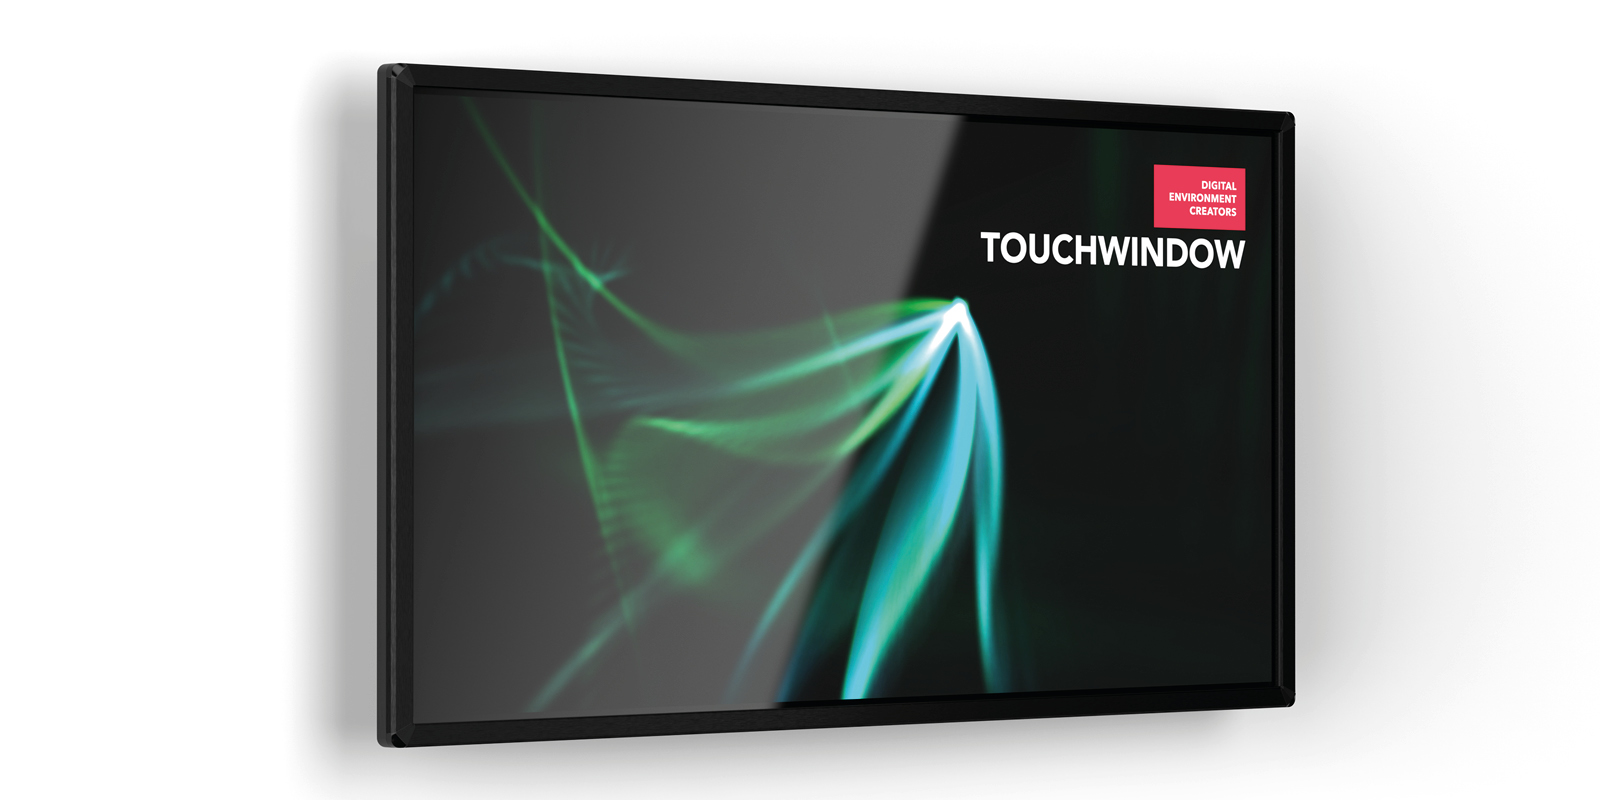 Touchwindow display